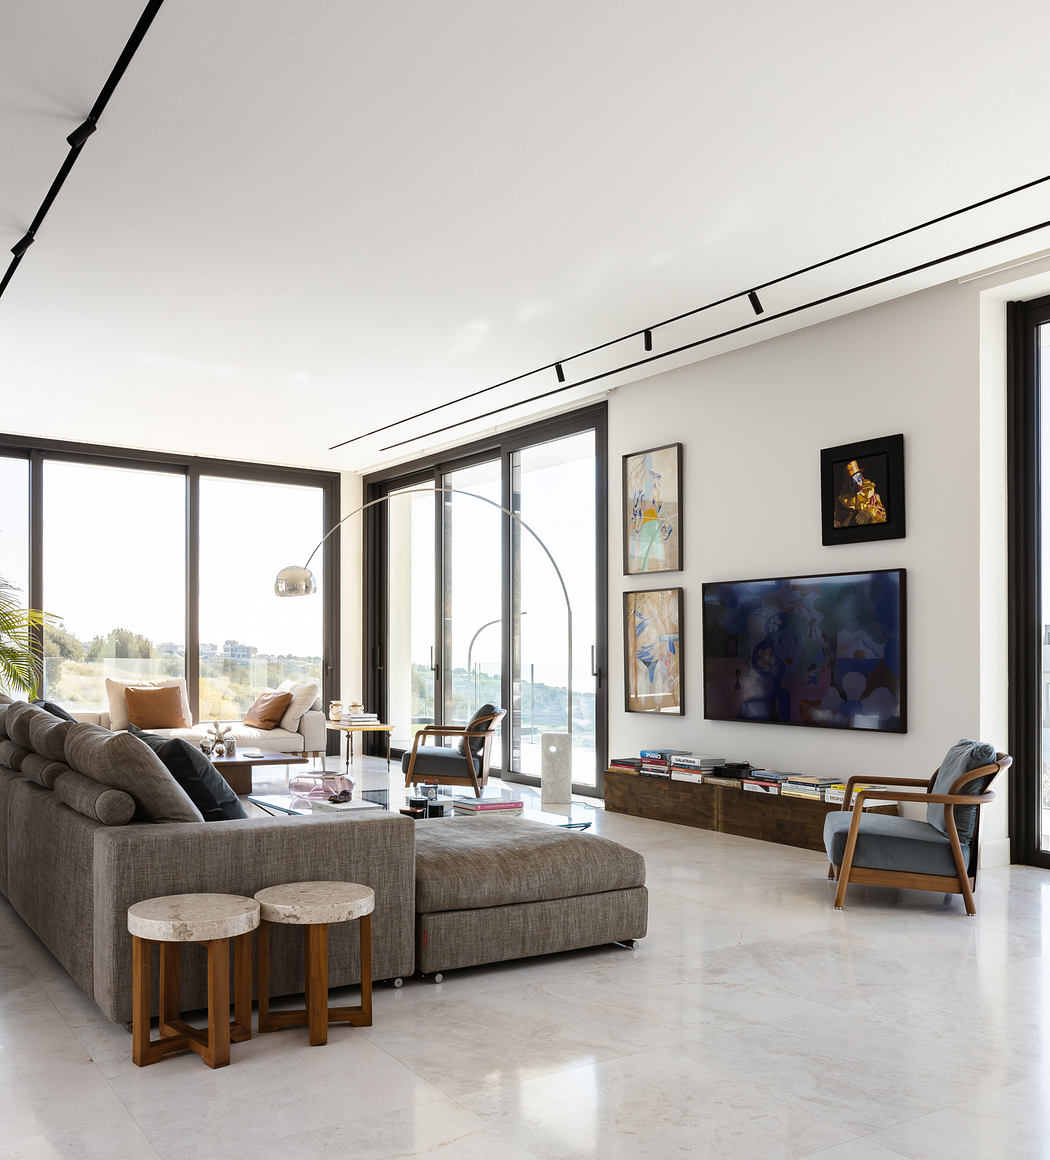 Spacious, modern living room with large windows, artwork, and minimalist furnishings.